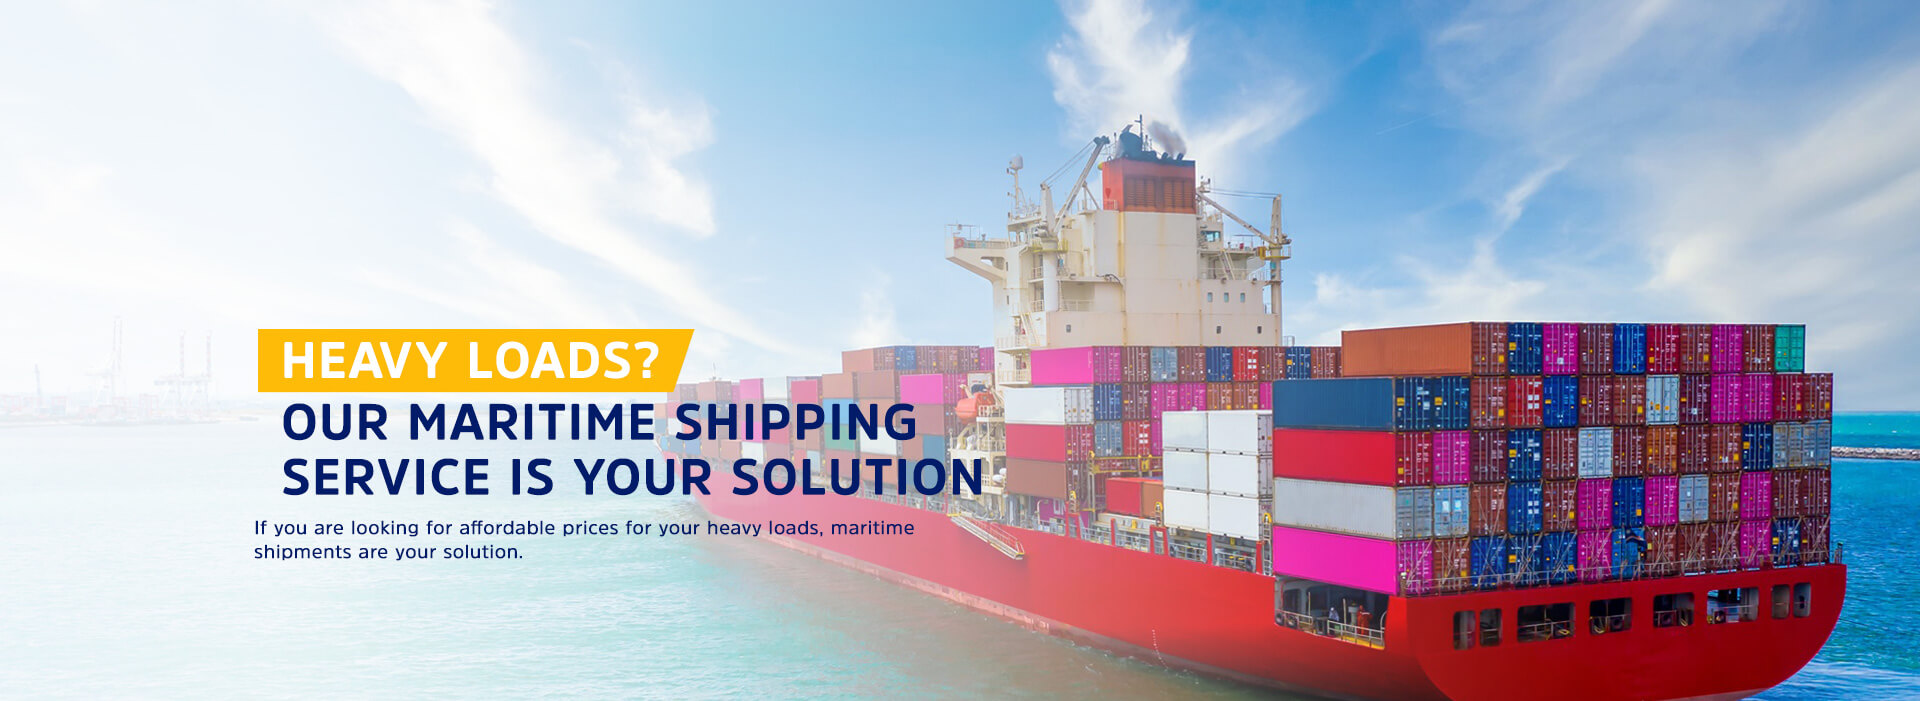 Logistics services & cargo shipments from USA to Venezuela and Panama